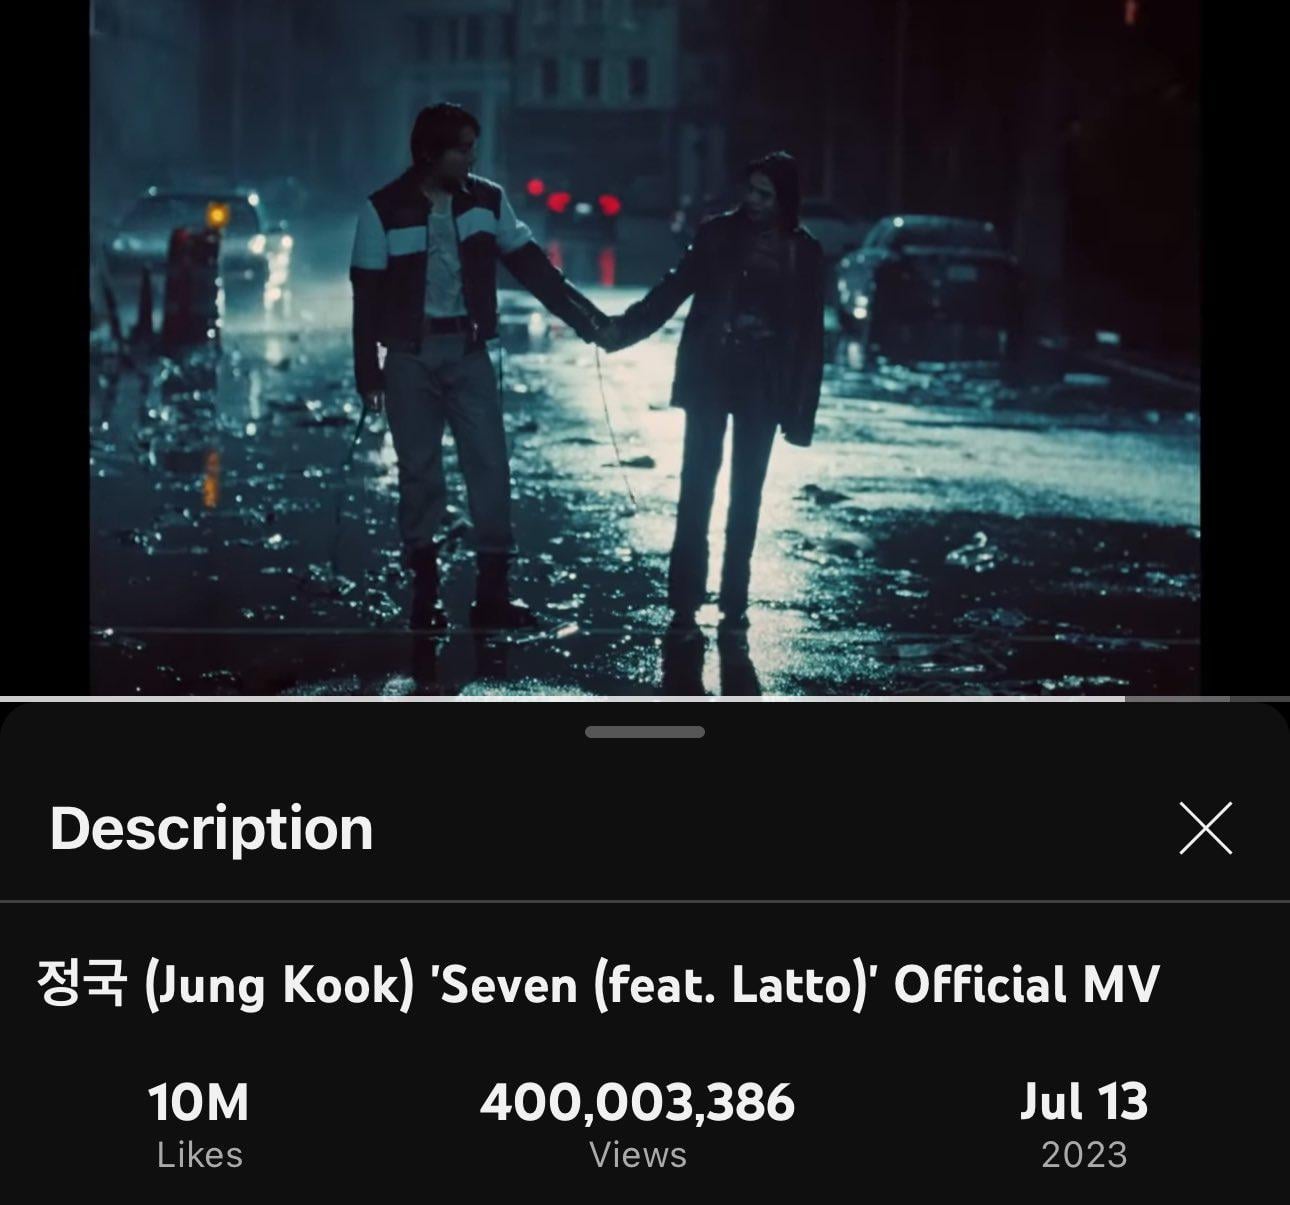 Jungkook’s “Seven (feat. Latto)” MV has surpassed 400 million views on YouTube - 200624